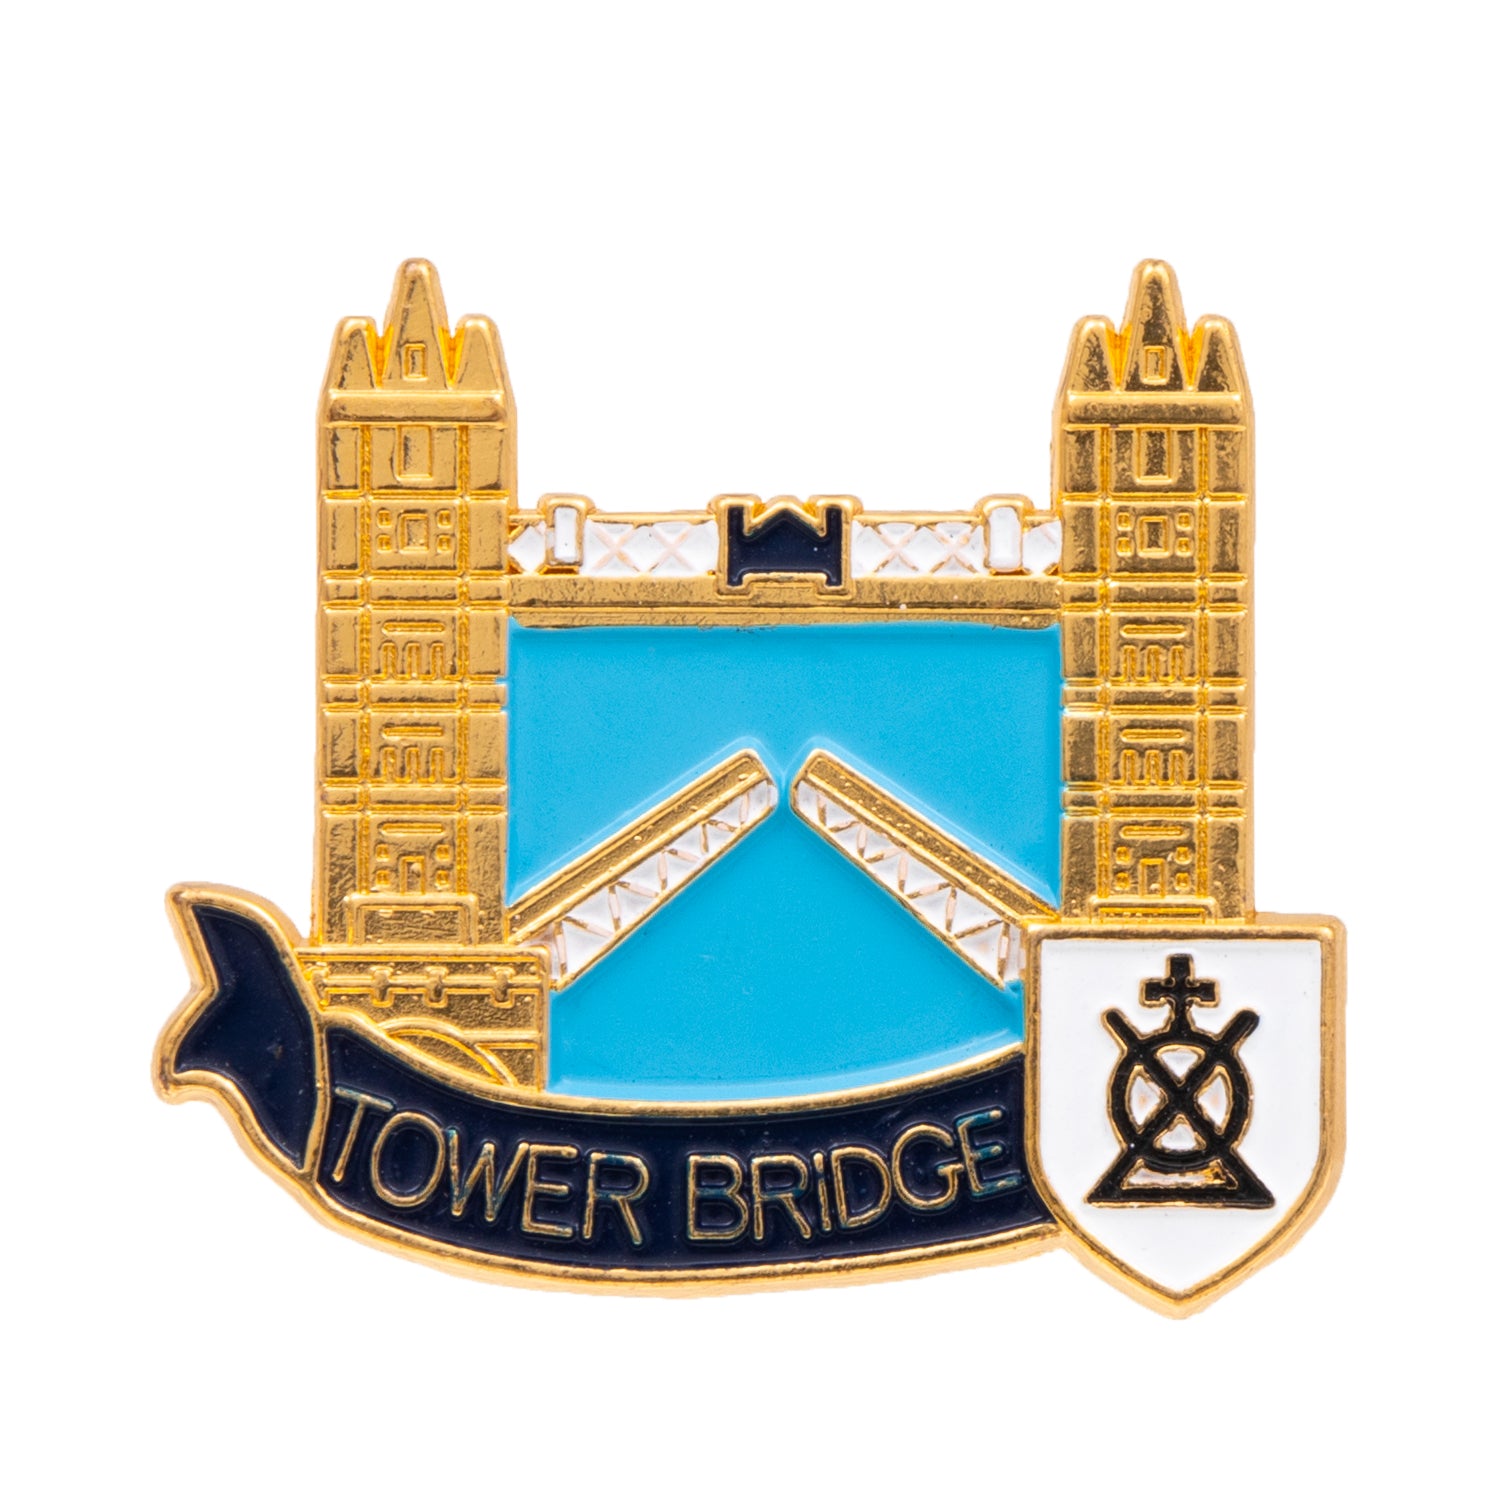 Tower Bridge Gold Magnet - Bridge House Estates 2